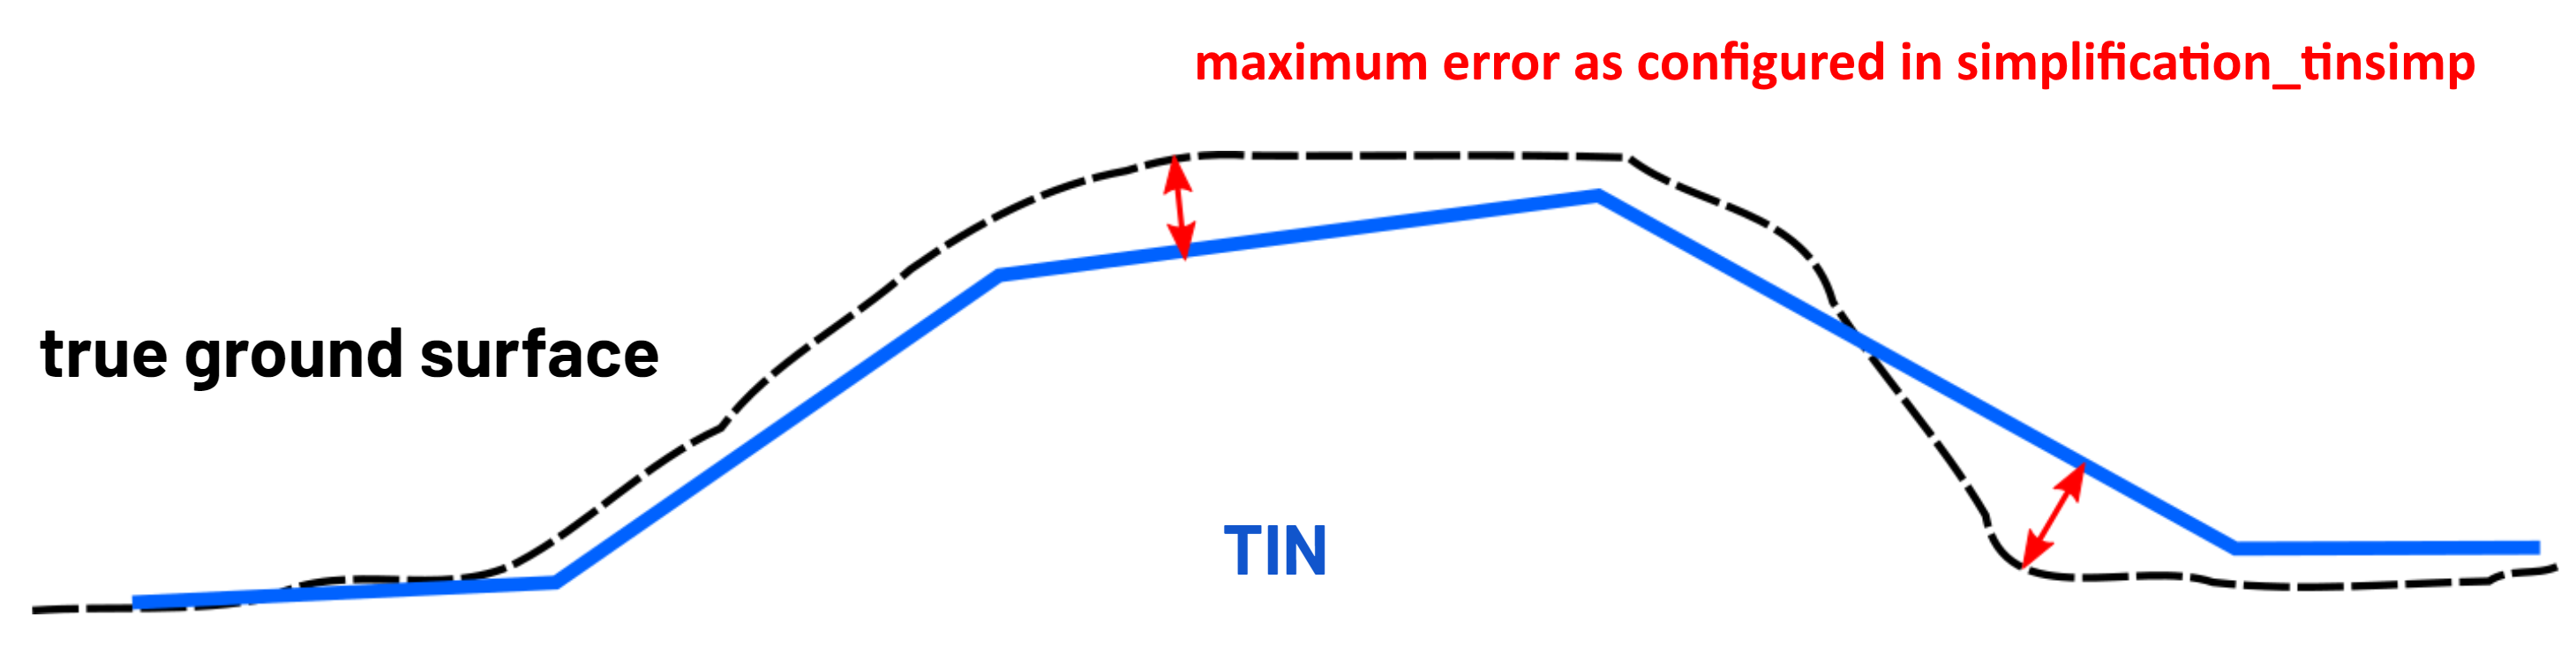 Terrain simplification error definition